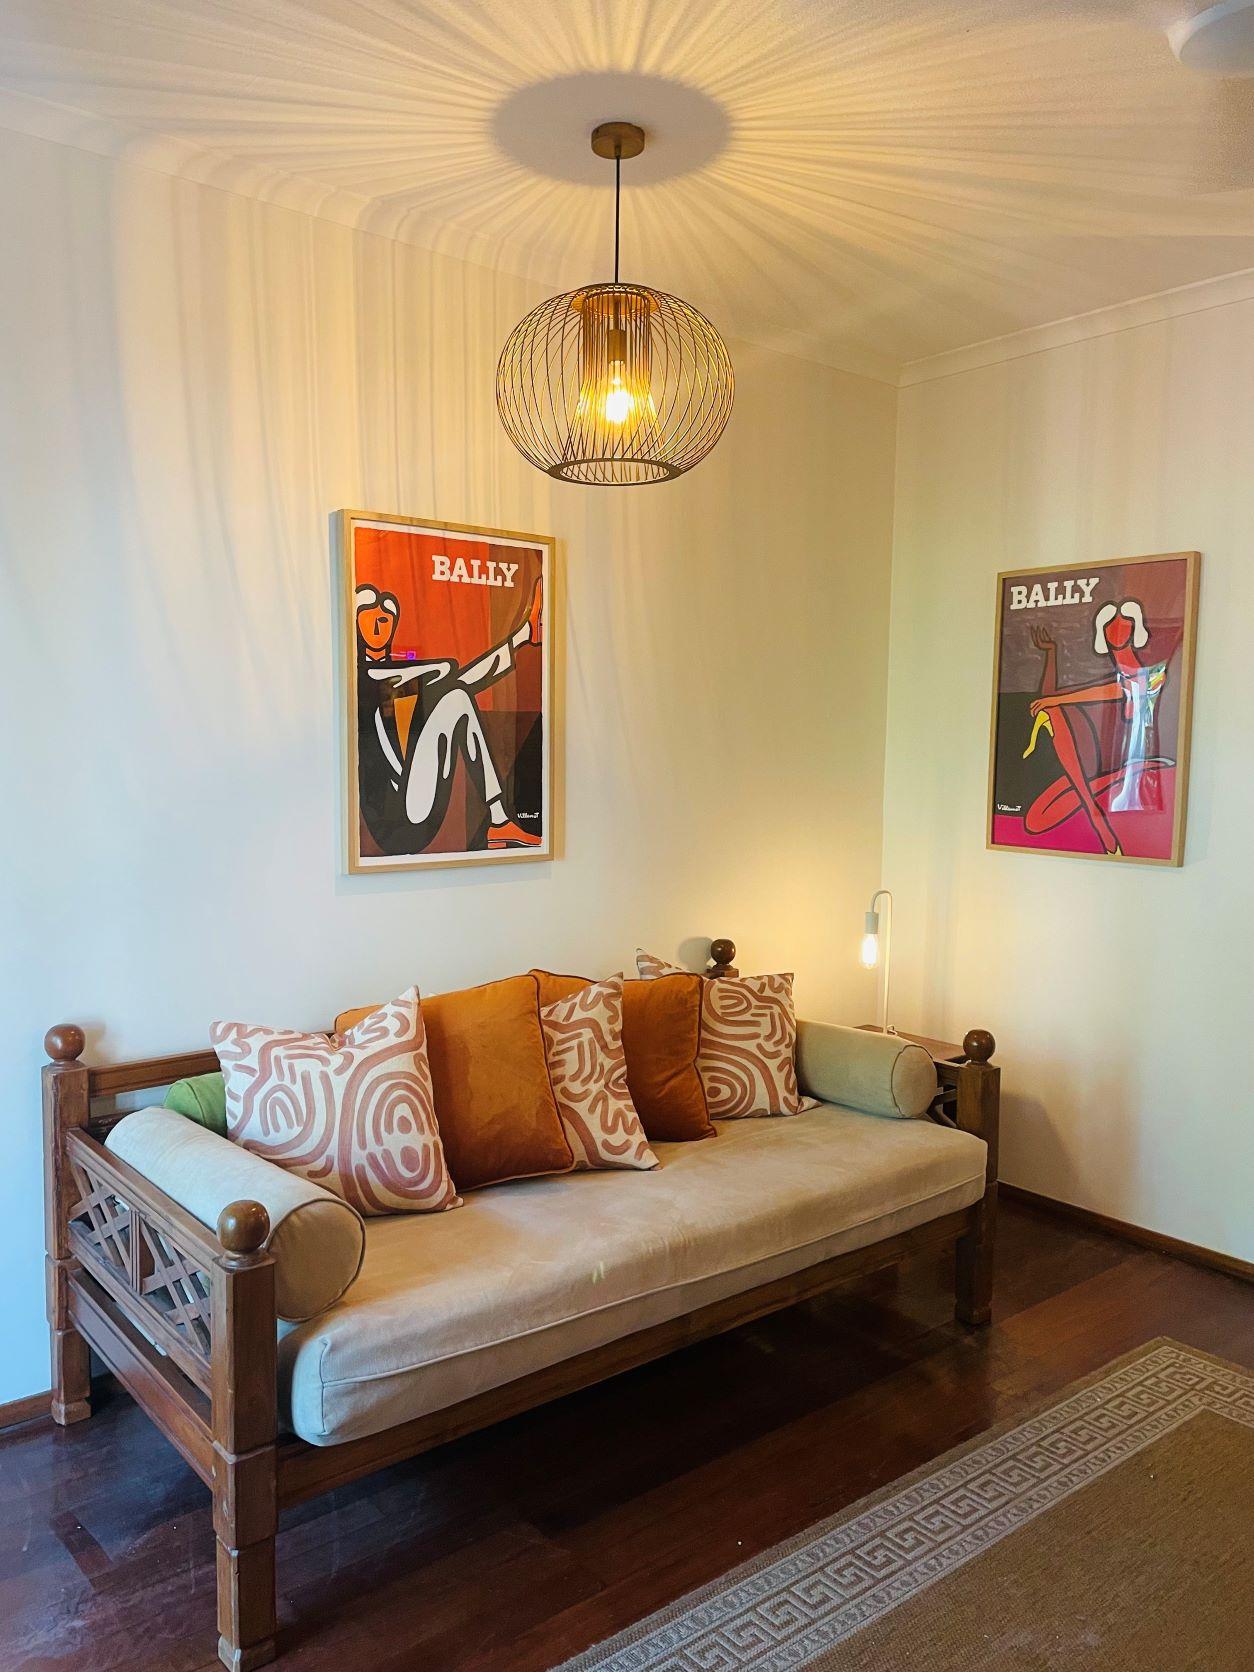 1 Bedroom Apartment ~ BALLY meets Bali @ Hibiscus